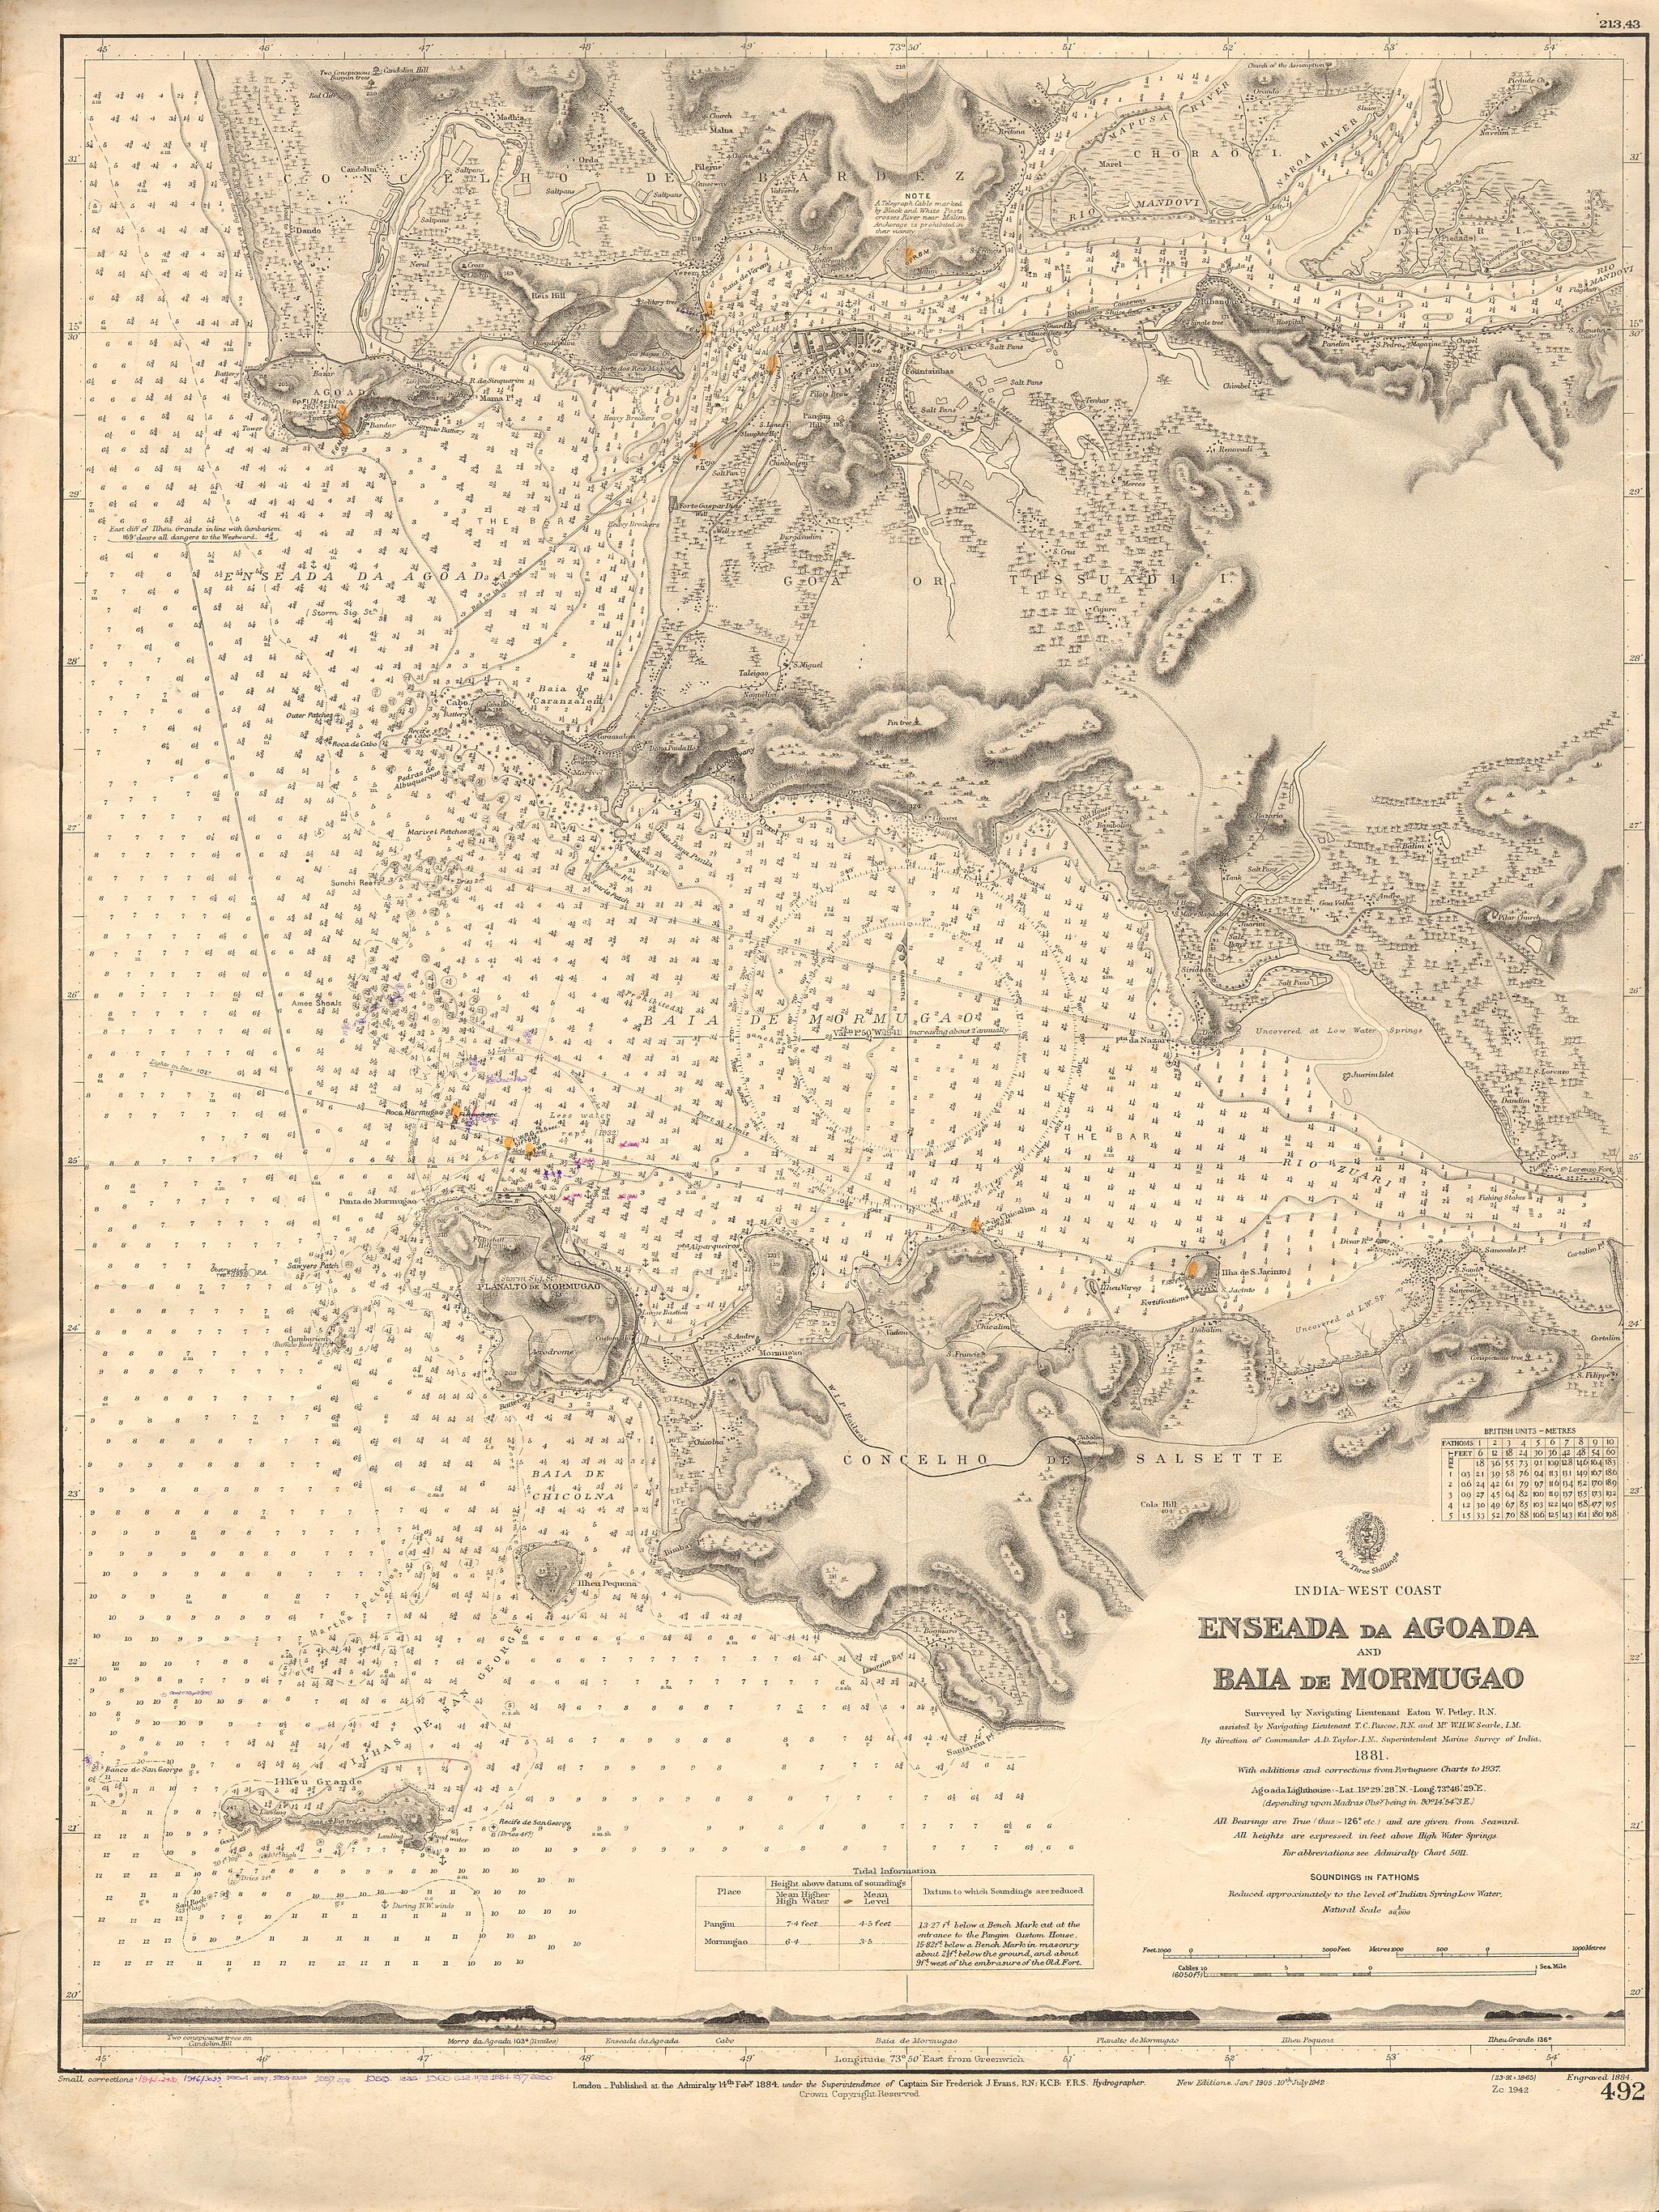 mormugao map 1881